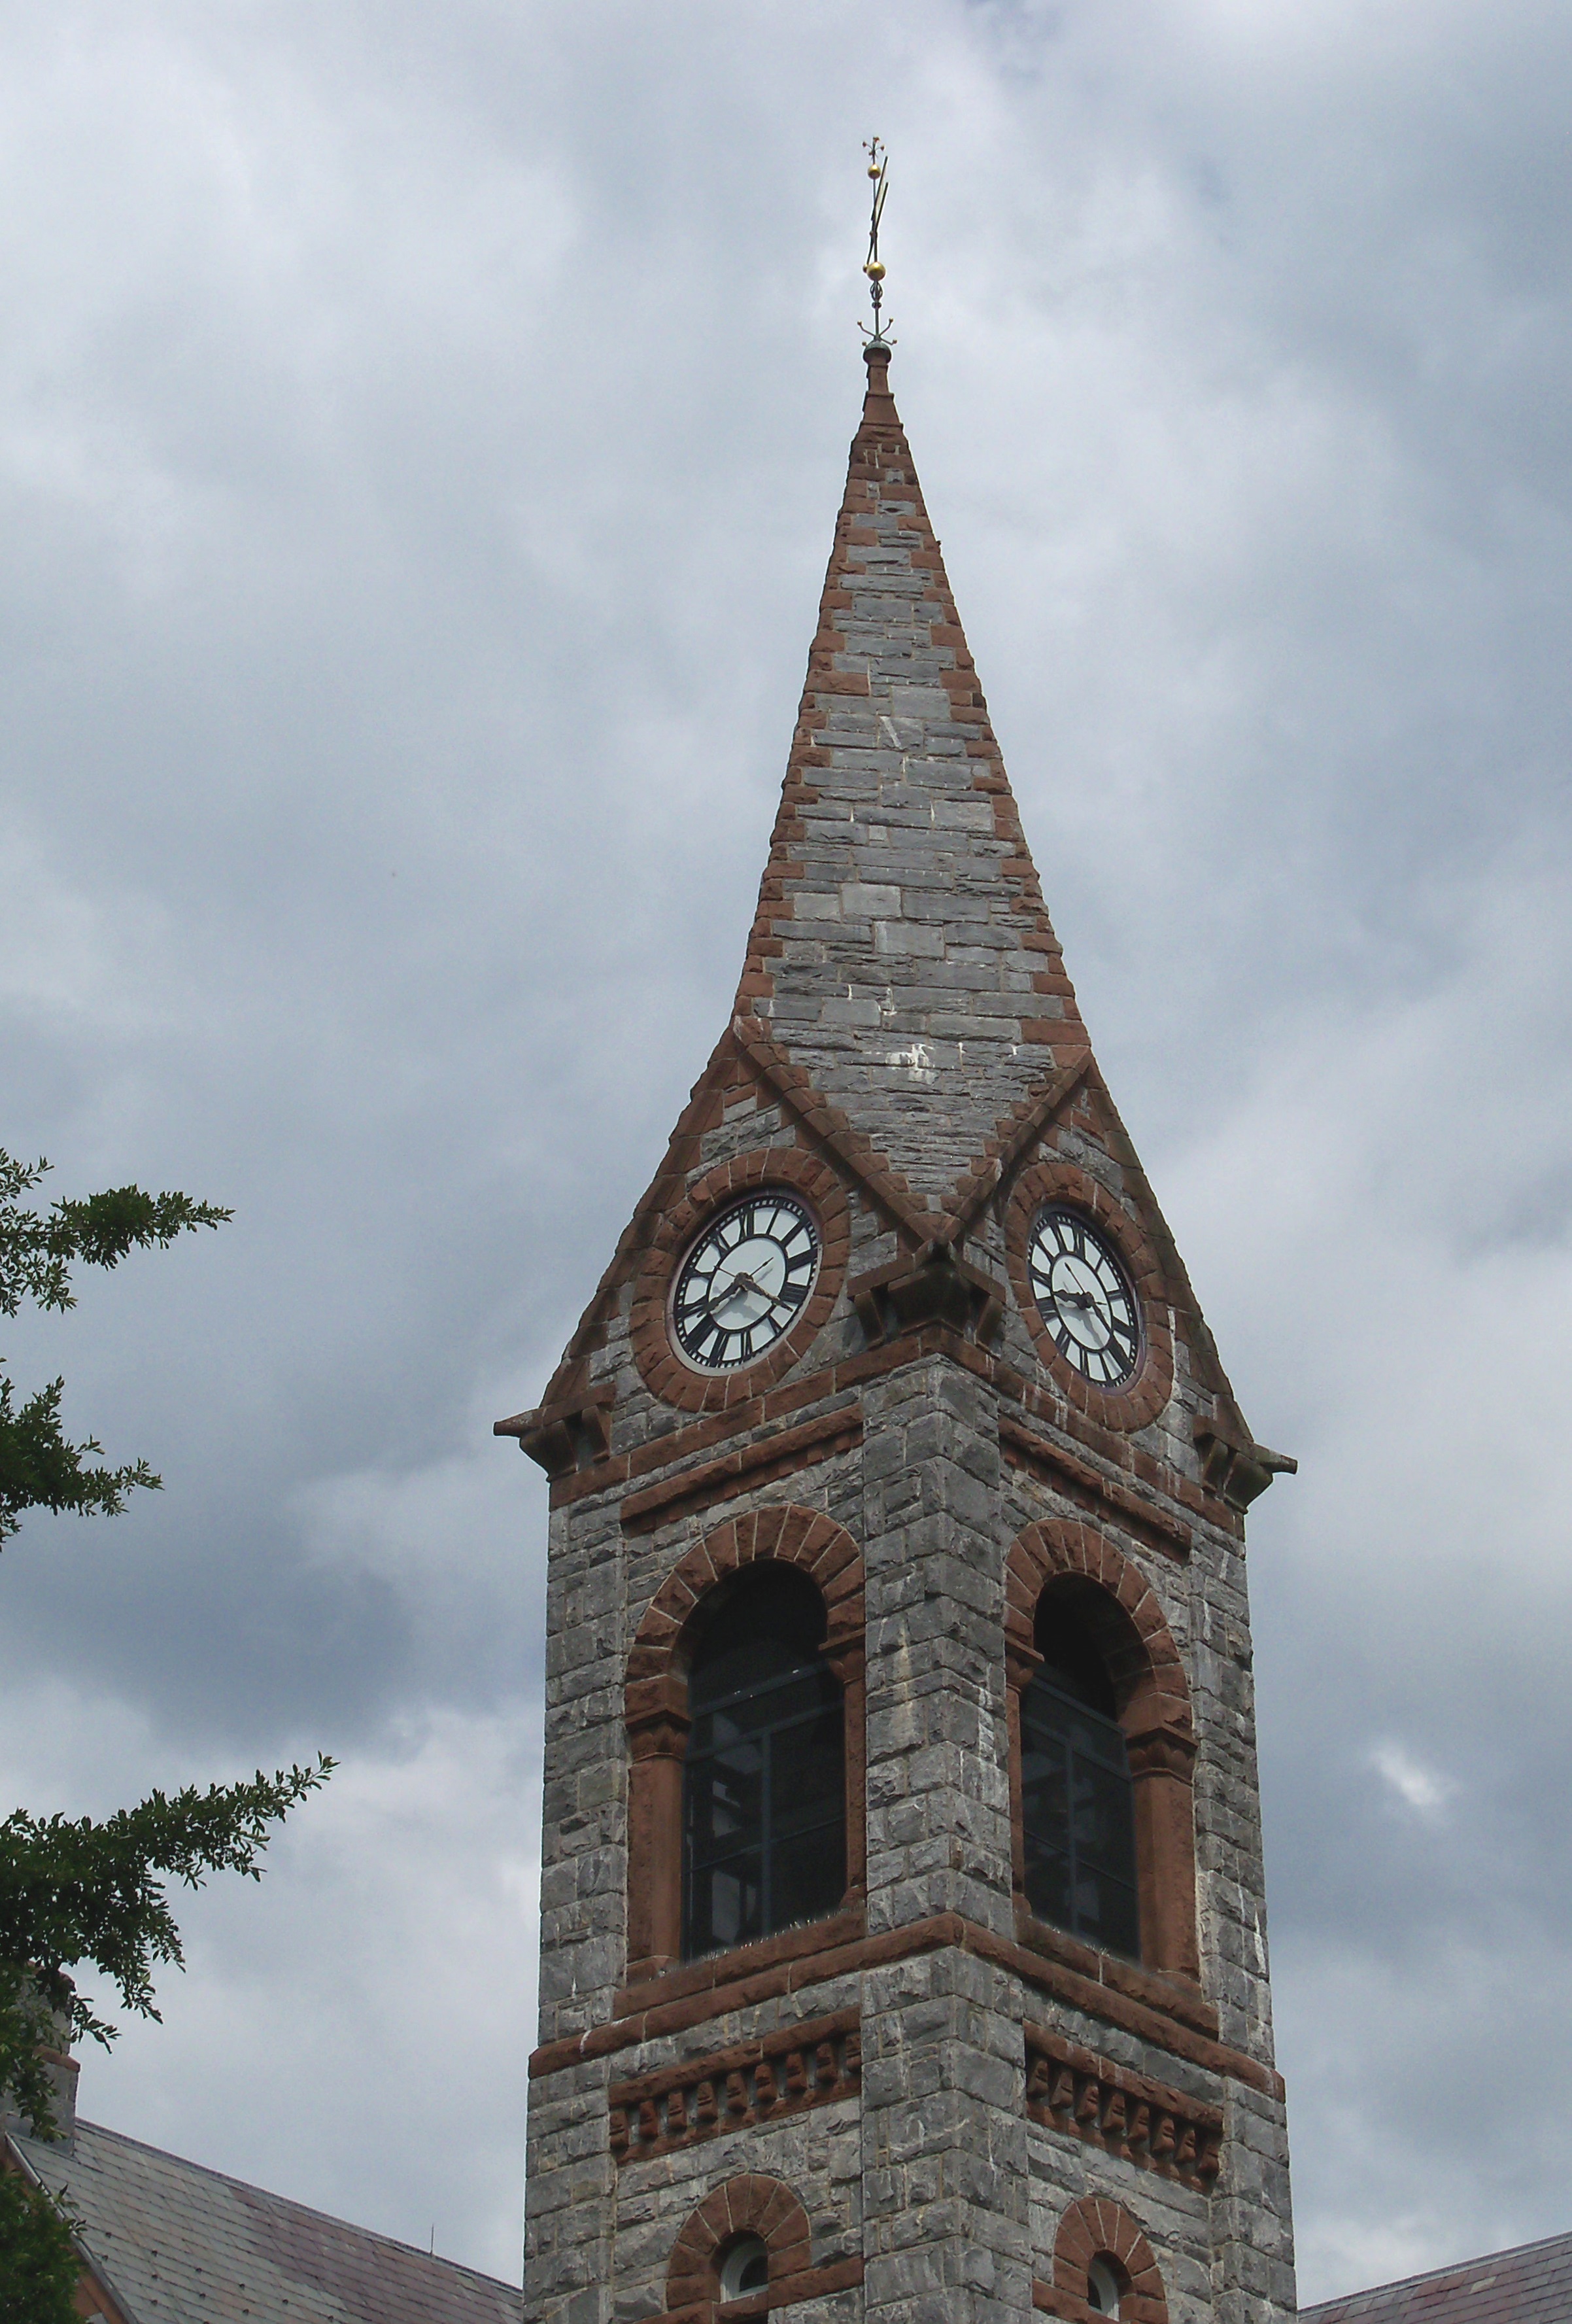 File:Old Chapel steeple - panoramio.jpg - Wikimedia Commons